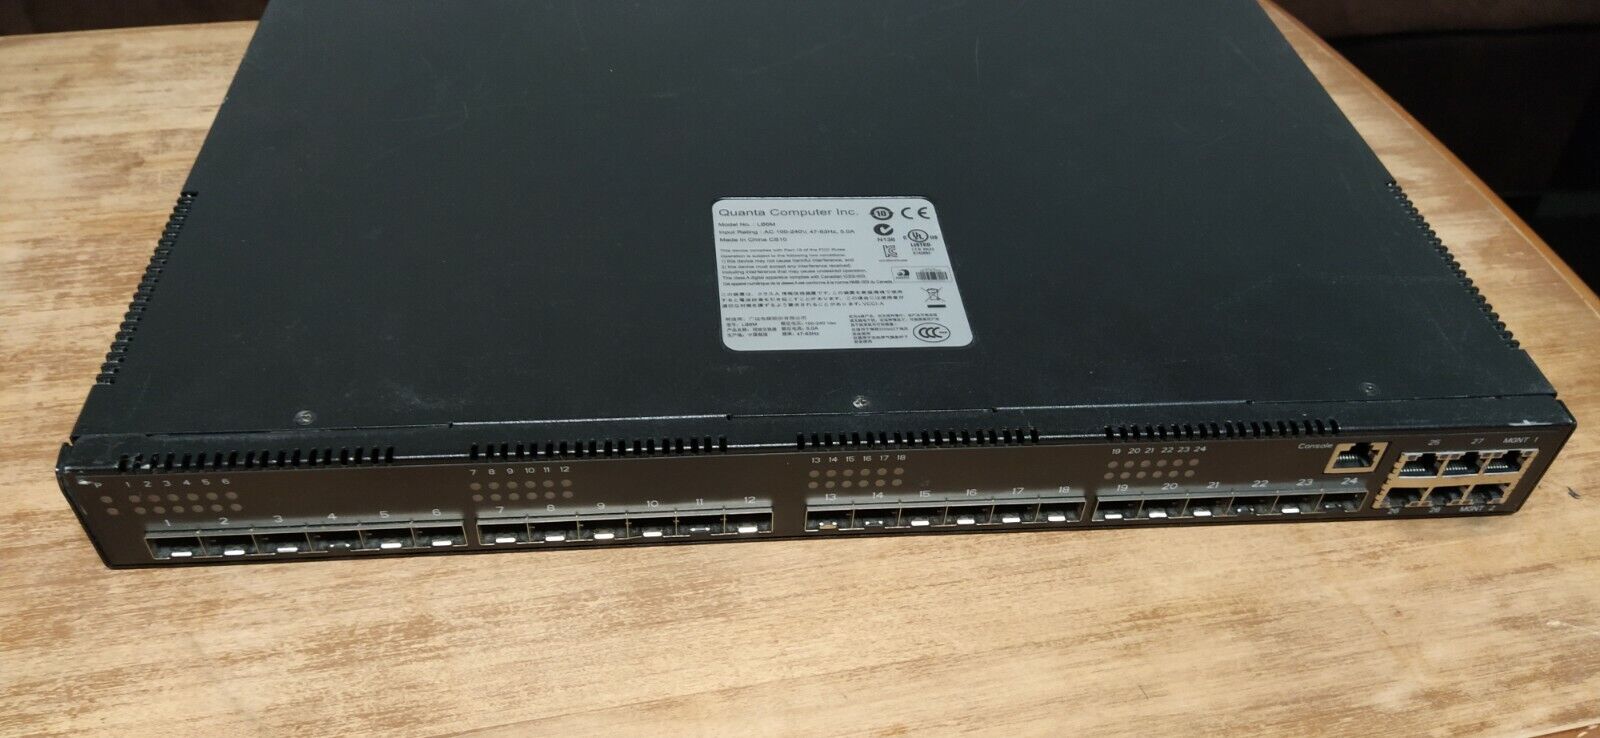 Quanta LB6M 24-port 10GbE SFP+ switch with Brocade L3 firmware